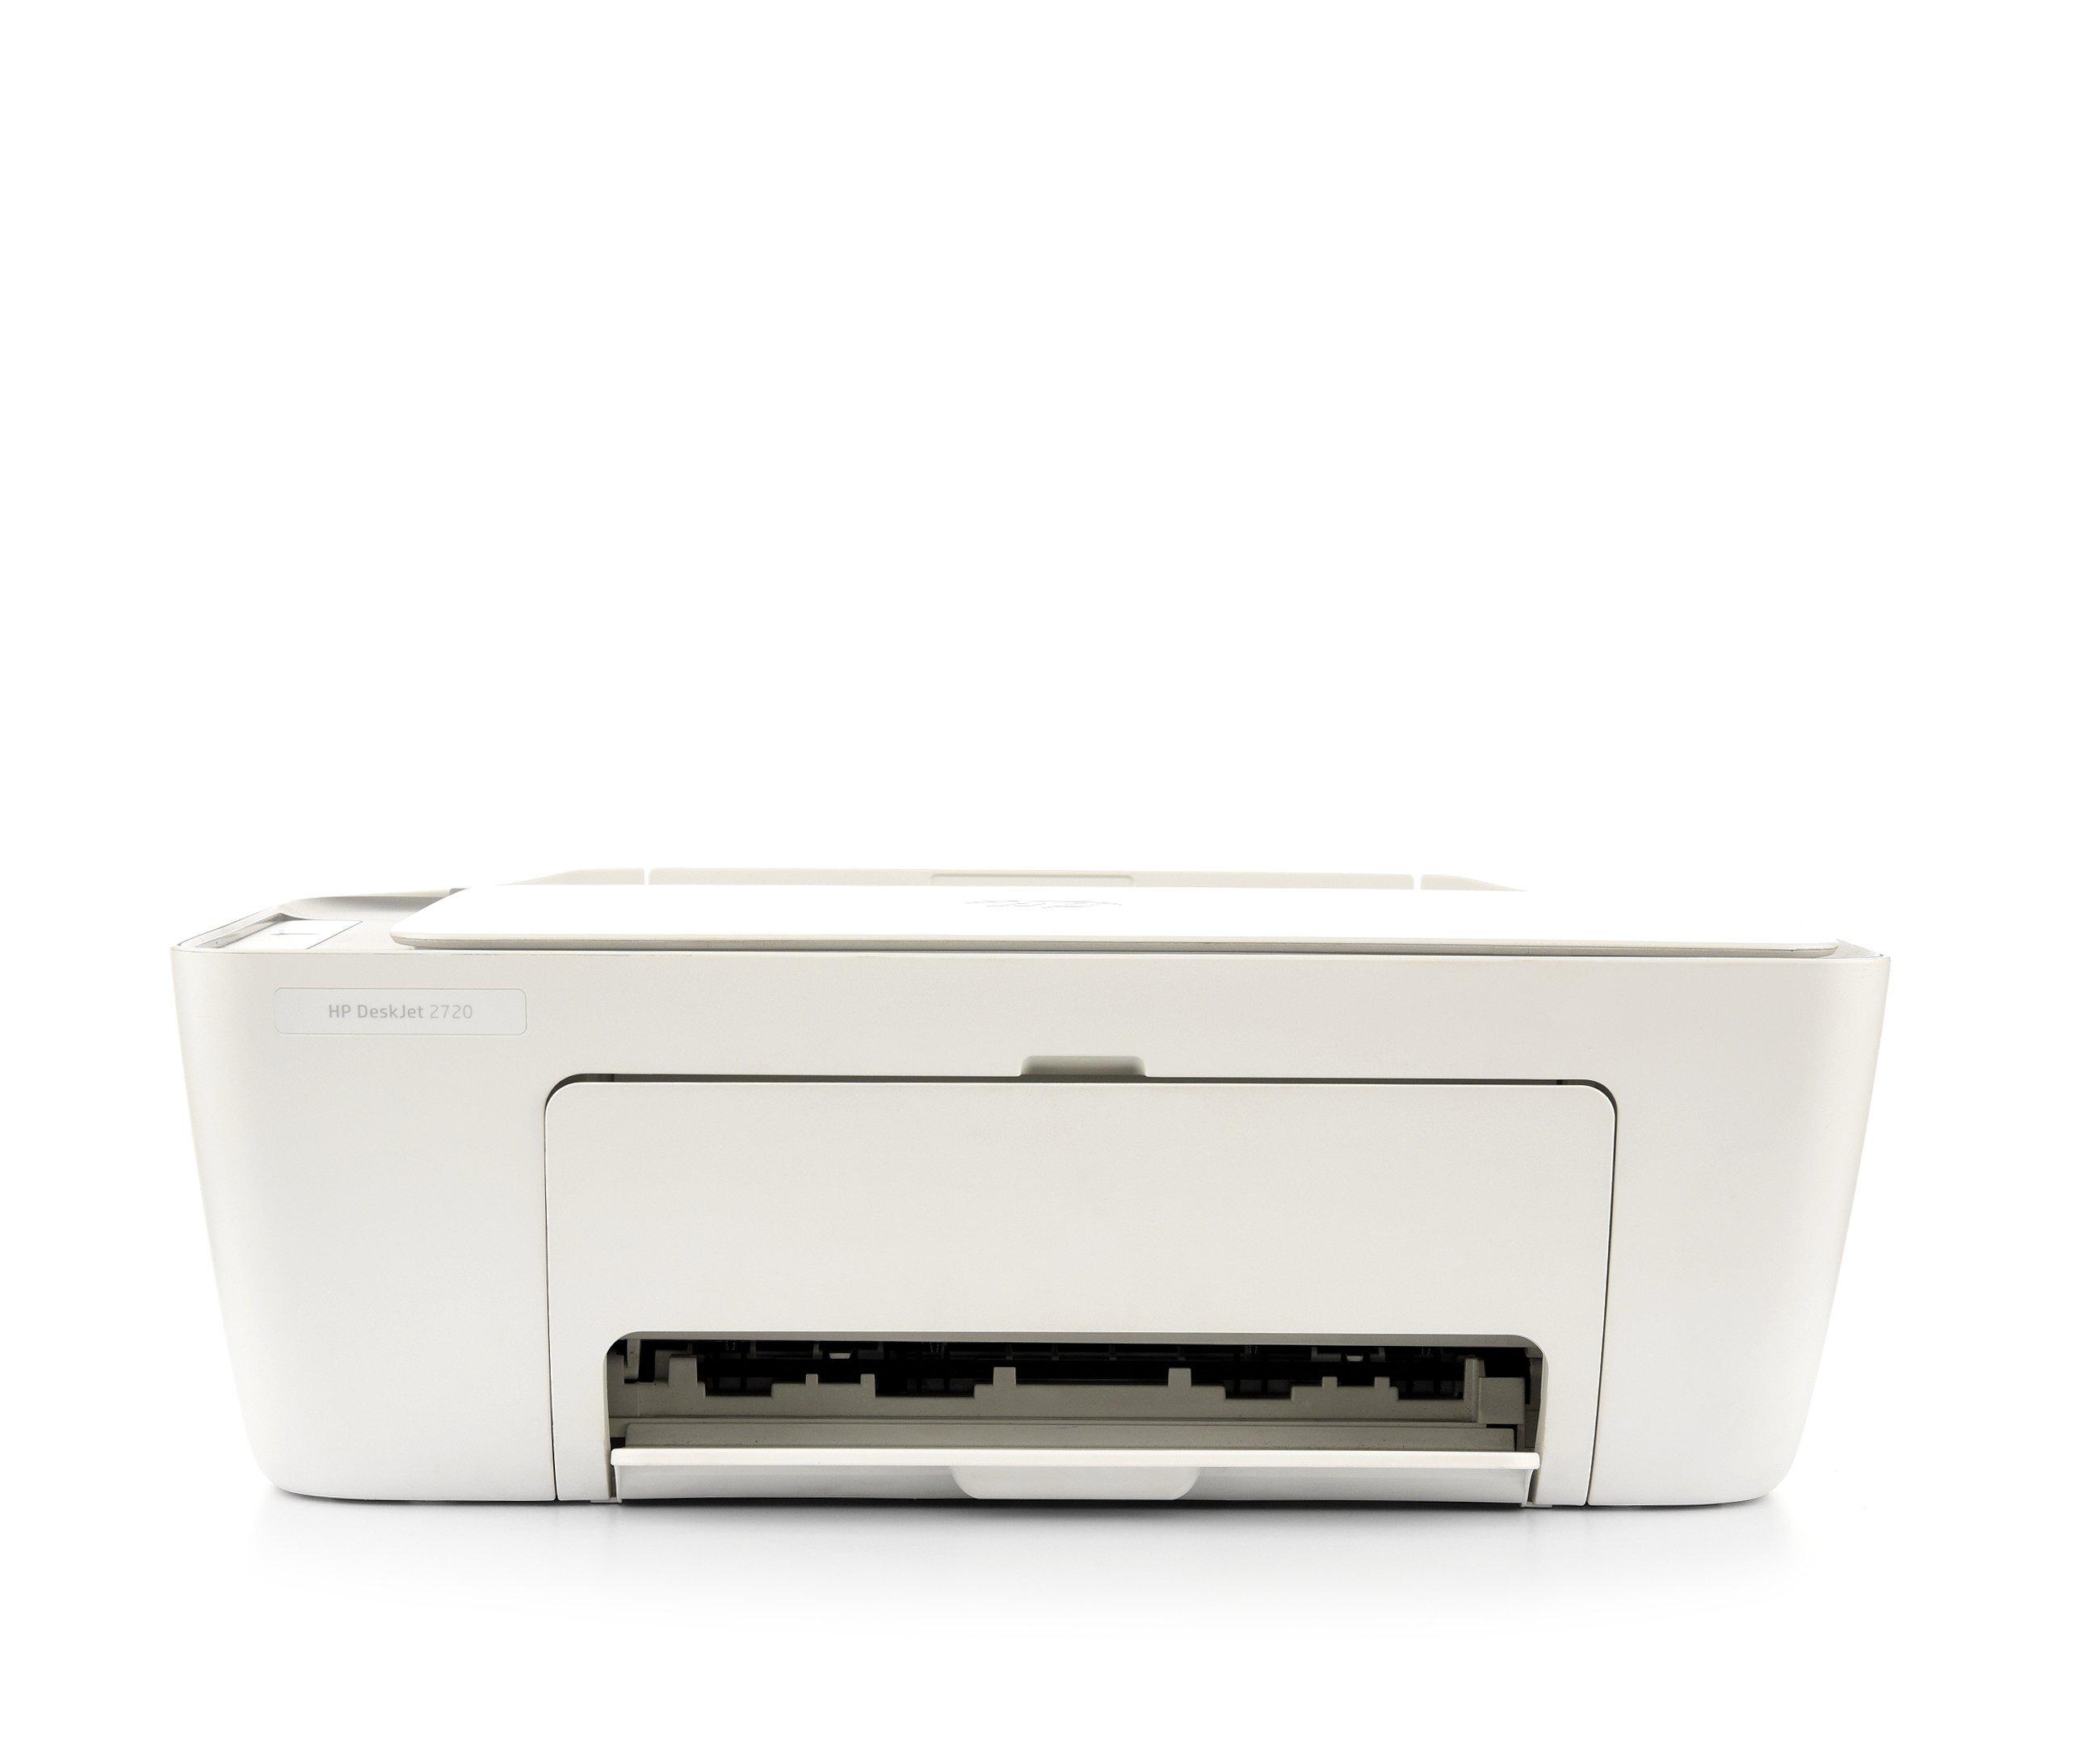 lip Rose kleur Condenseren HP DeskJet 2720 All-in-One Printer, Print, Copy, Scan price in Saudi Arabia  | Extra Stores Saudi Arabia | kanbkam